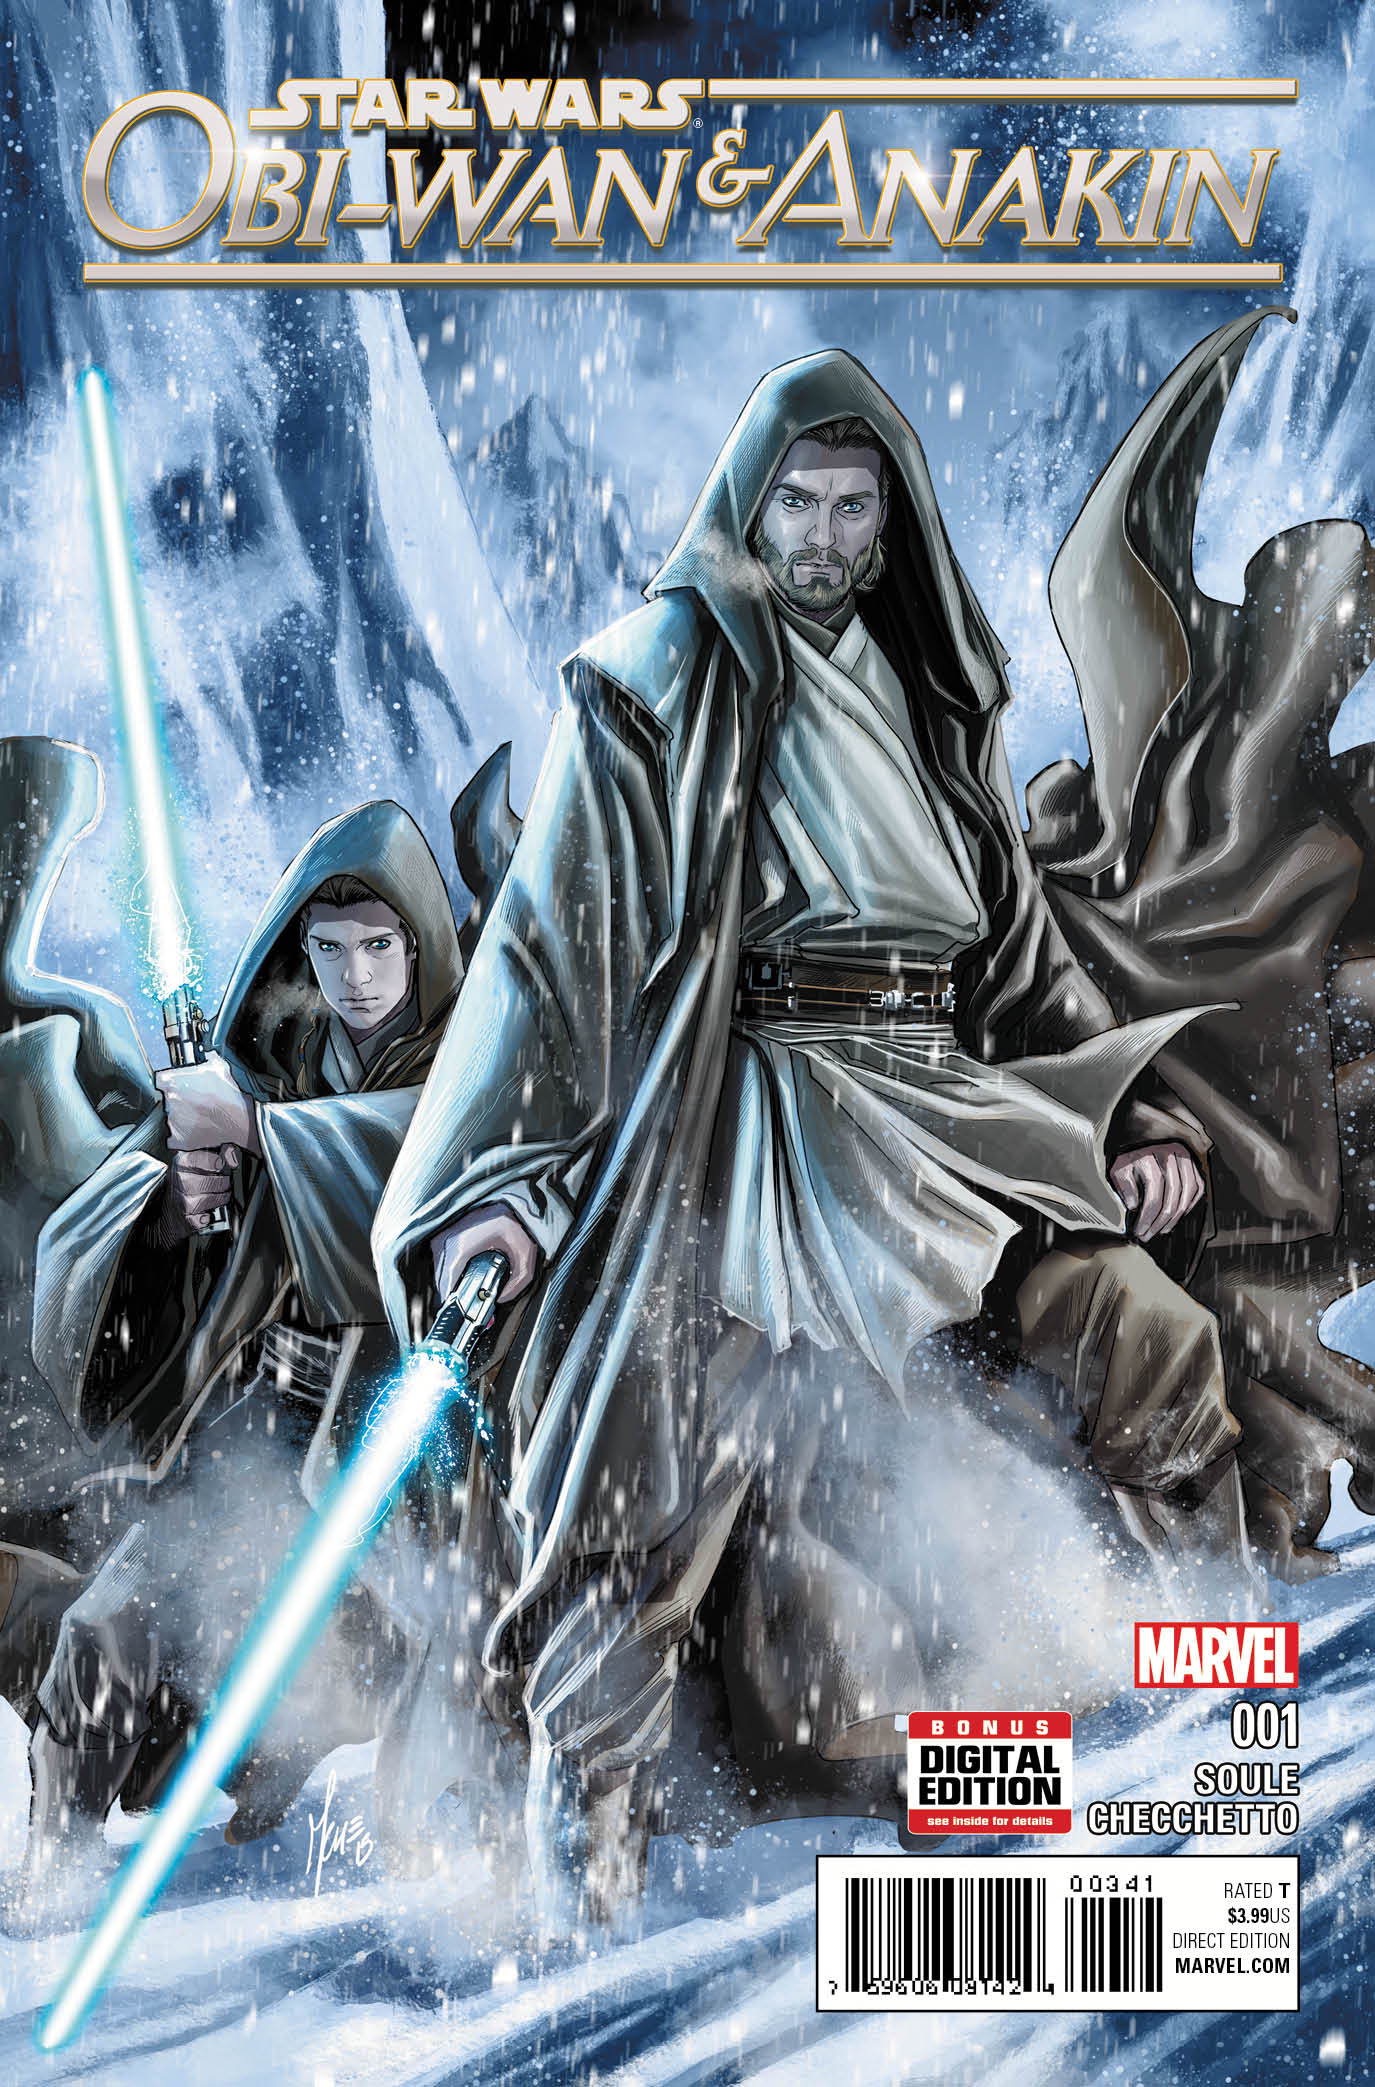 Obi-Wan and Anakin – First Volume in Marvel’s Latest Star Wars Mini-Series!